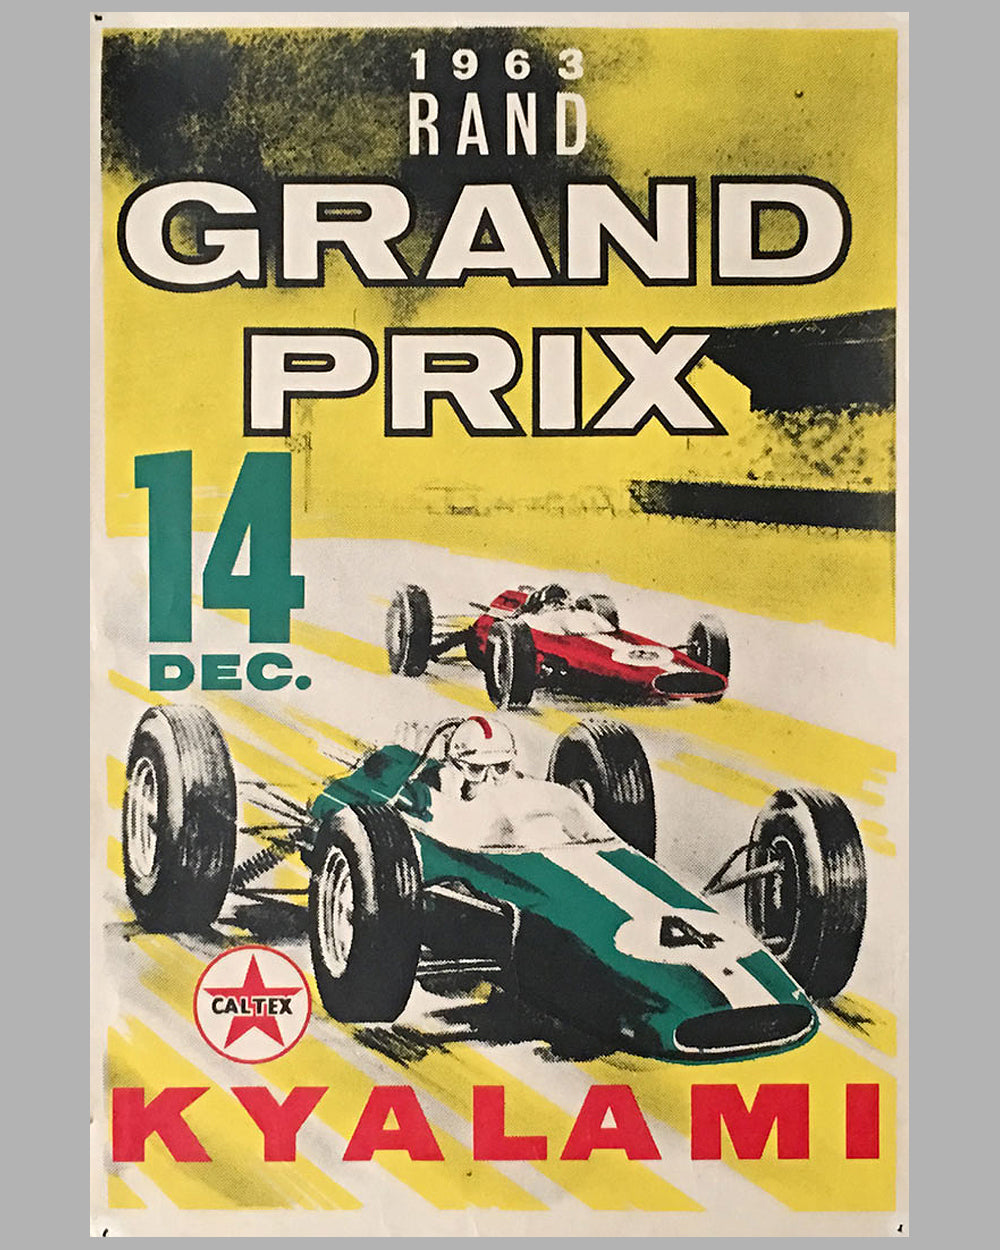 1963 Rand Grand Prix in Kyalami, South Africa original event poster